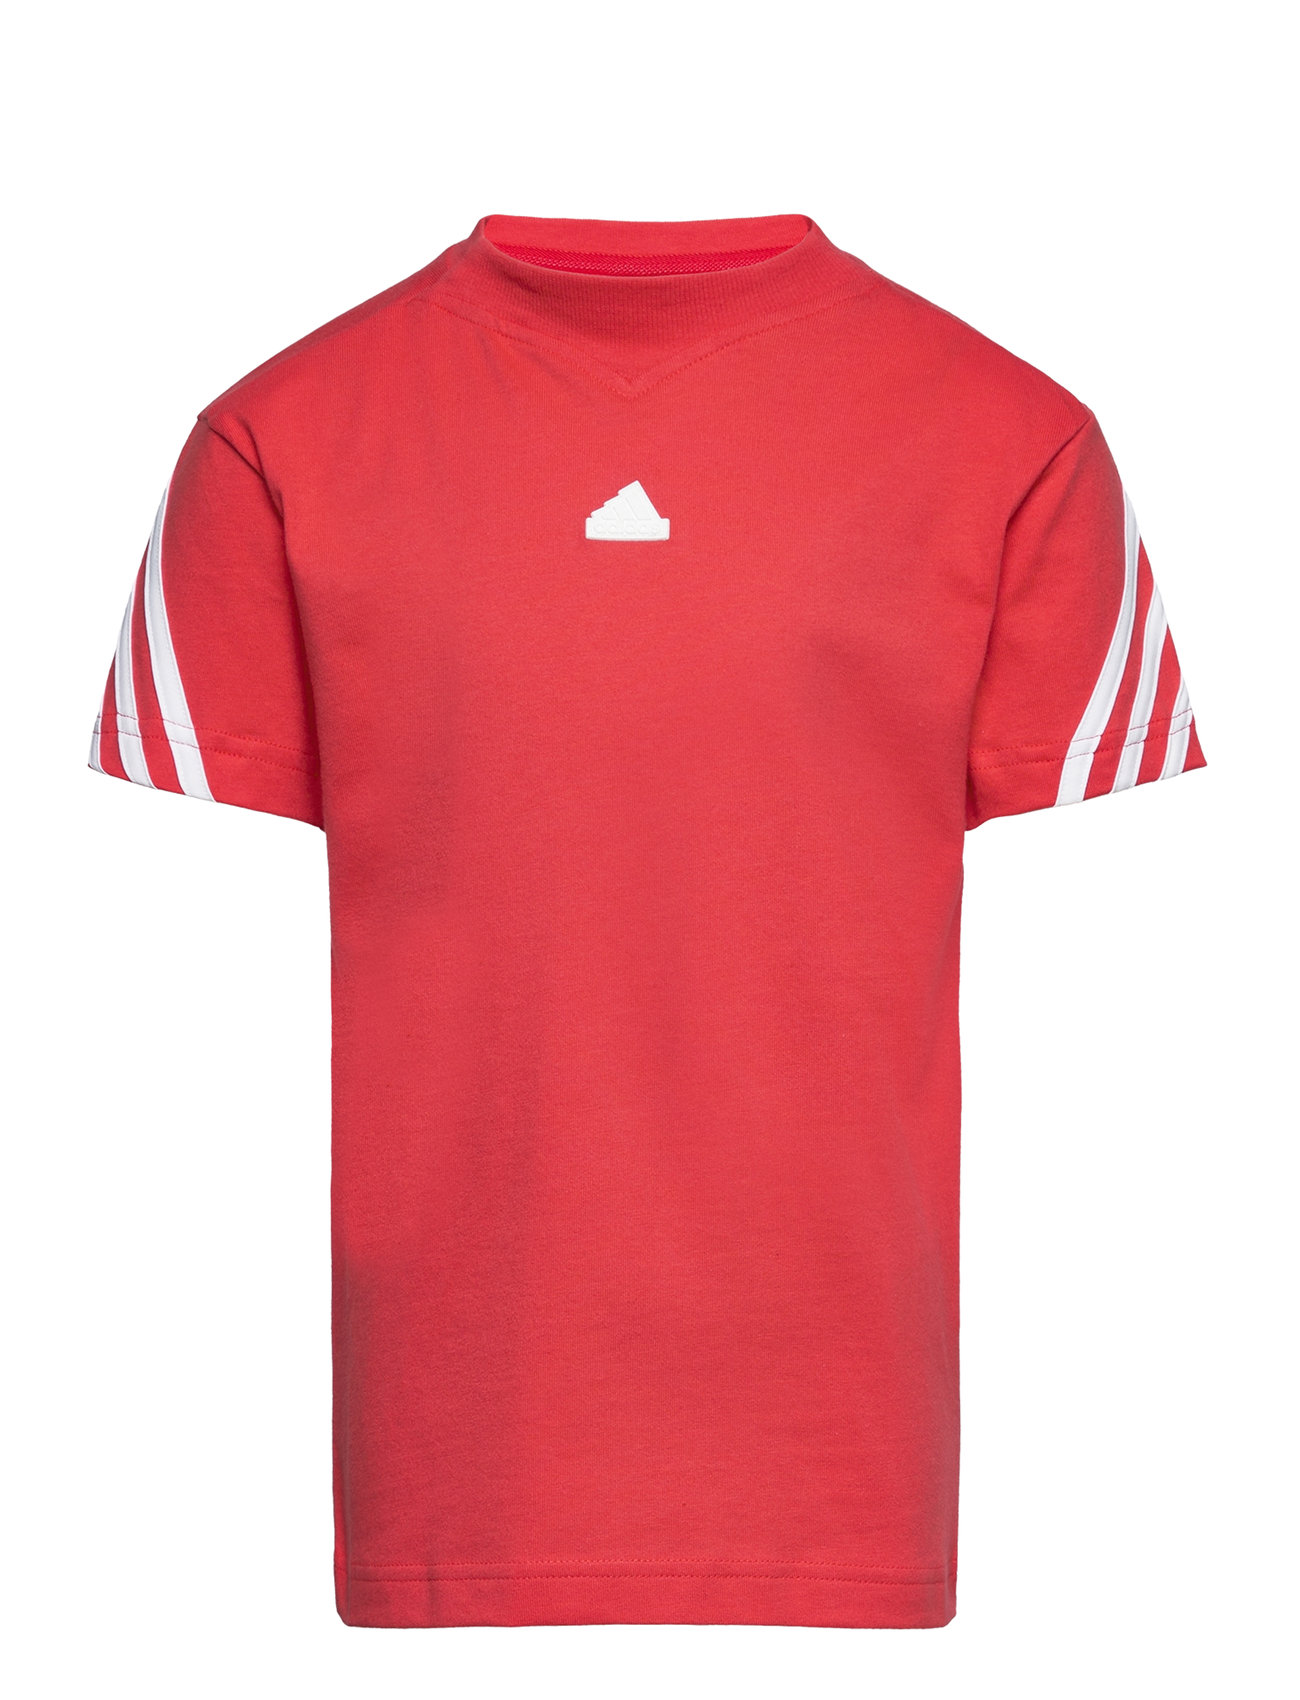 U Fi 3S T Sport T-shirts Short-sleeved Red Adidas Performance